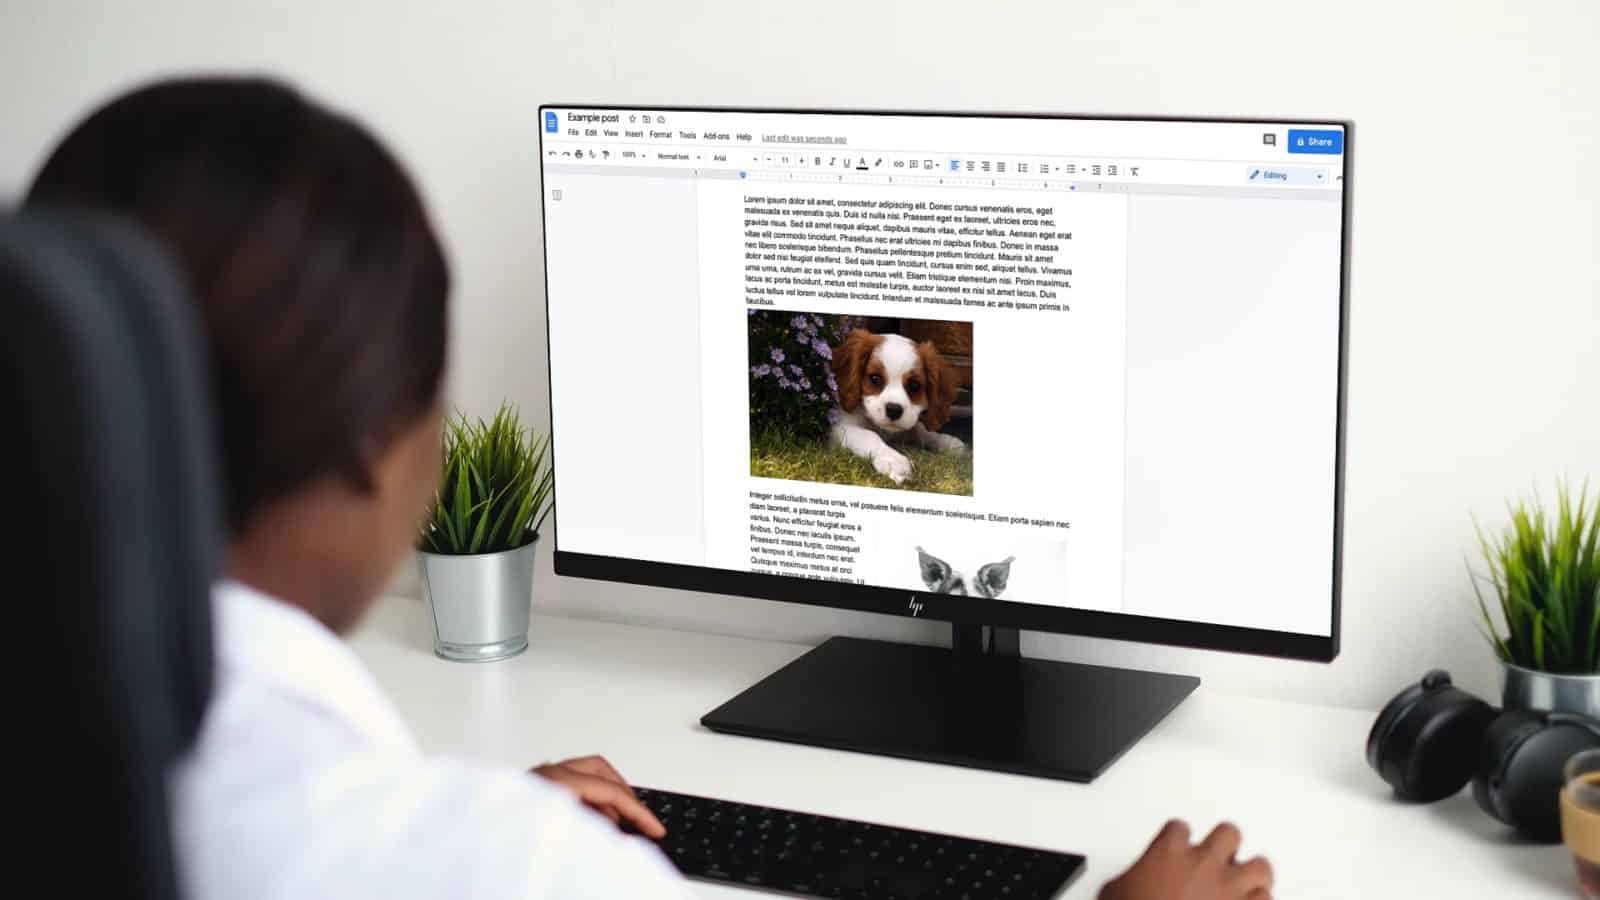 google docs with dog images